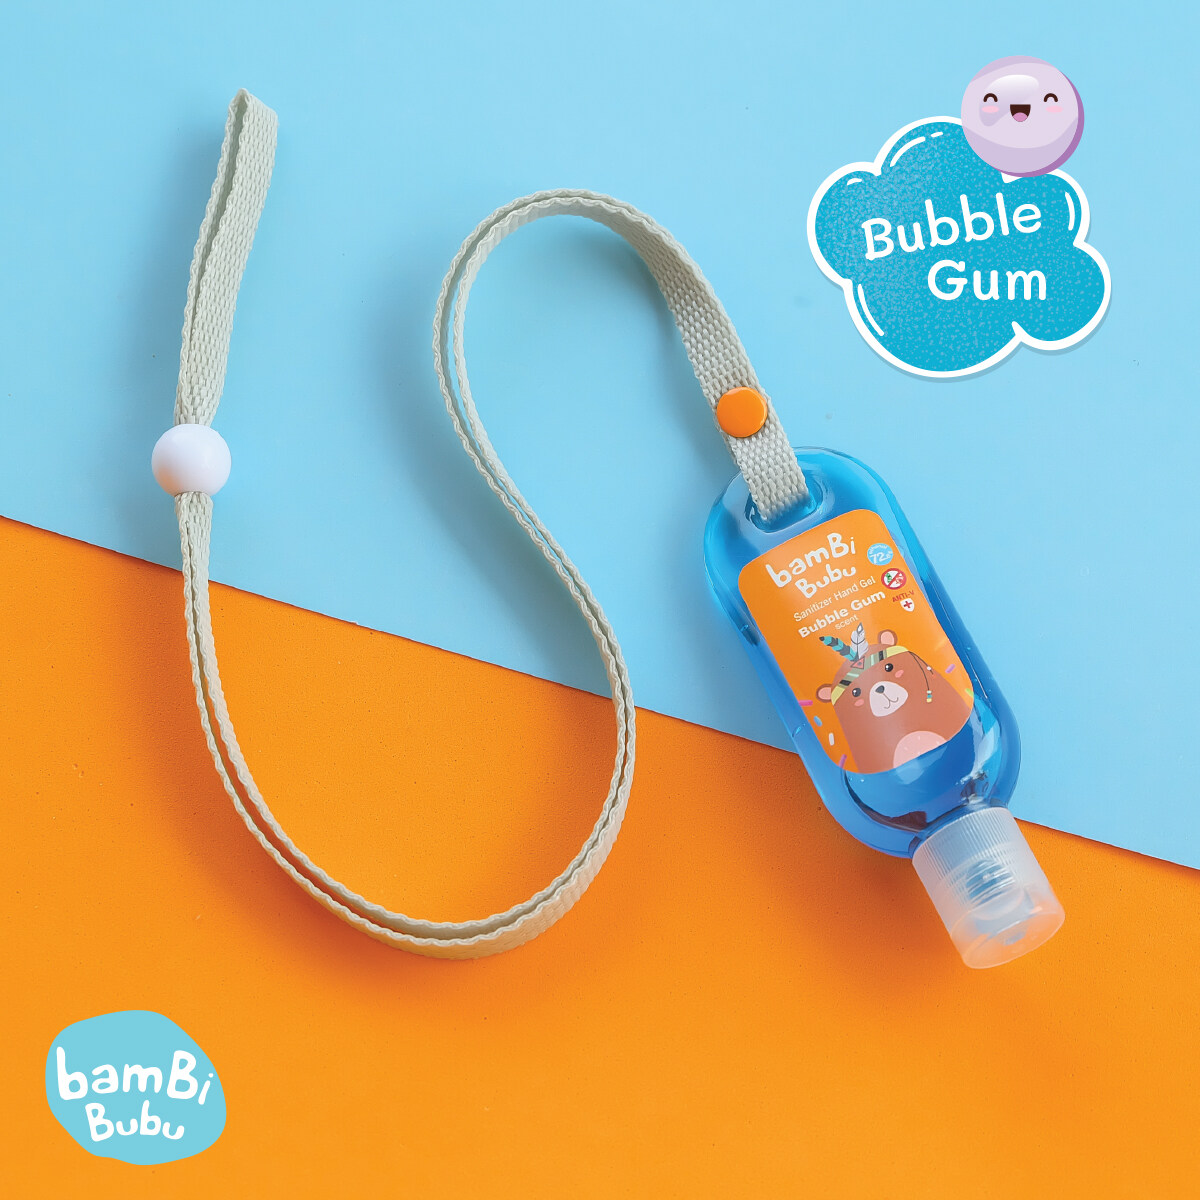 Bambi Bubu แบบคล้องคอ เจลล้างมือแอลกอฮอล์สำหรับเด็ก กลิ่น Bubble Gum ขนาด 30ml